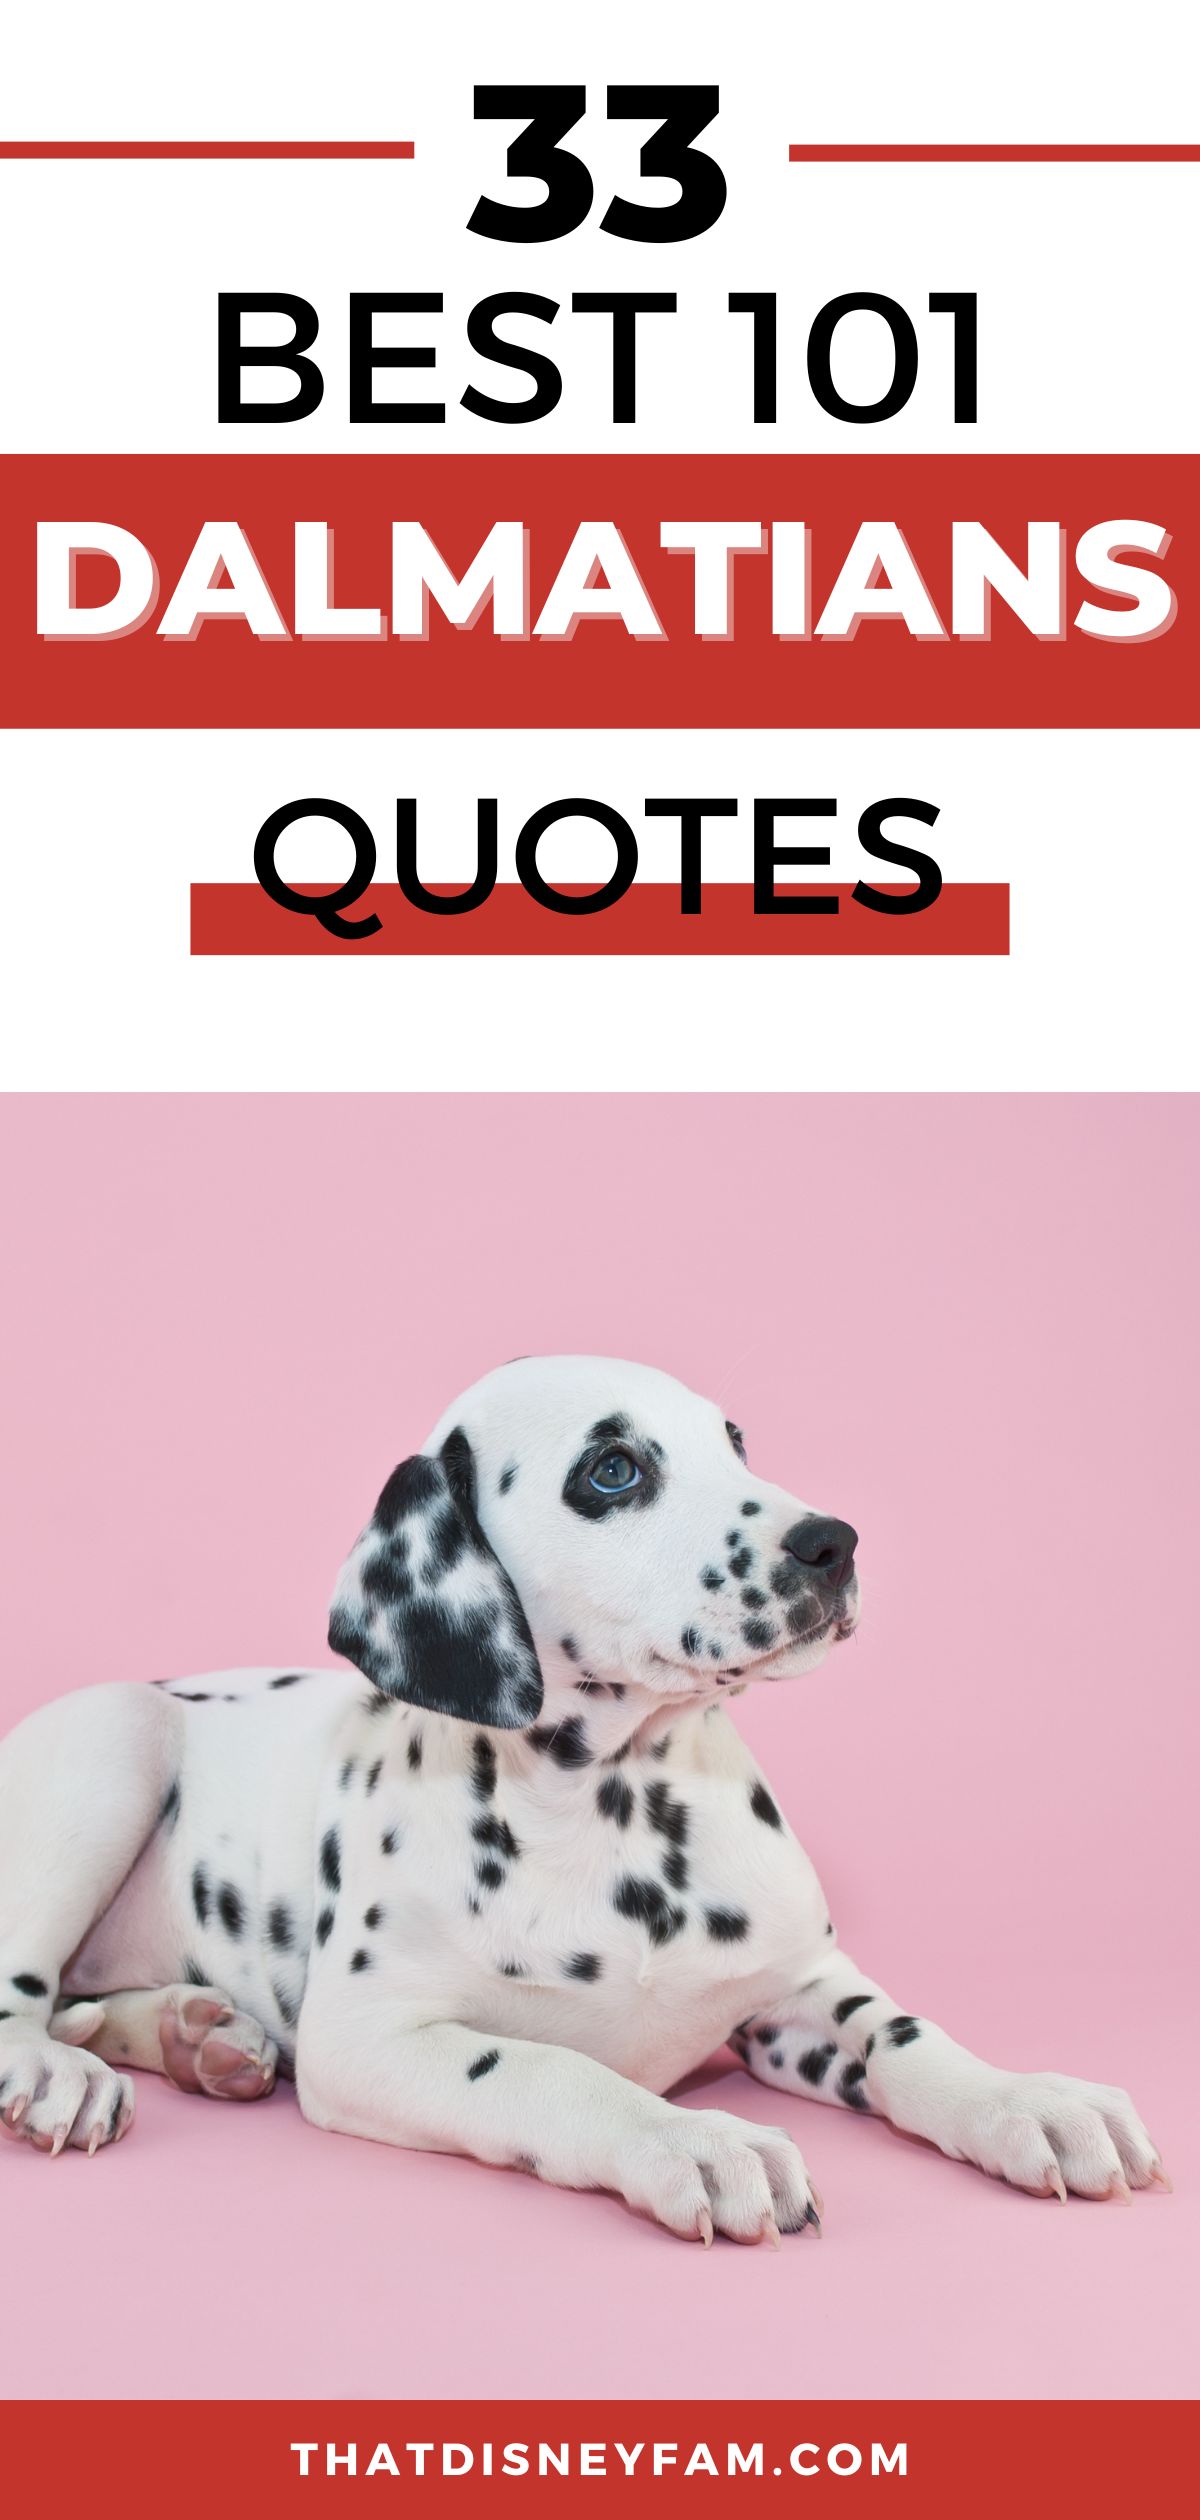 101 dalmatians quotes